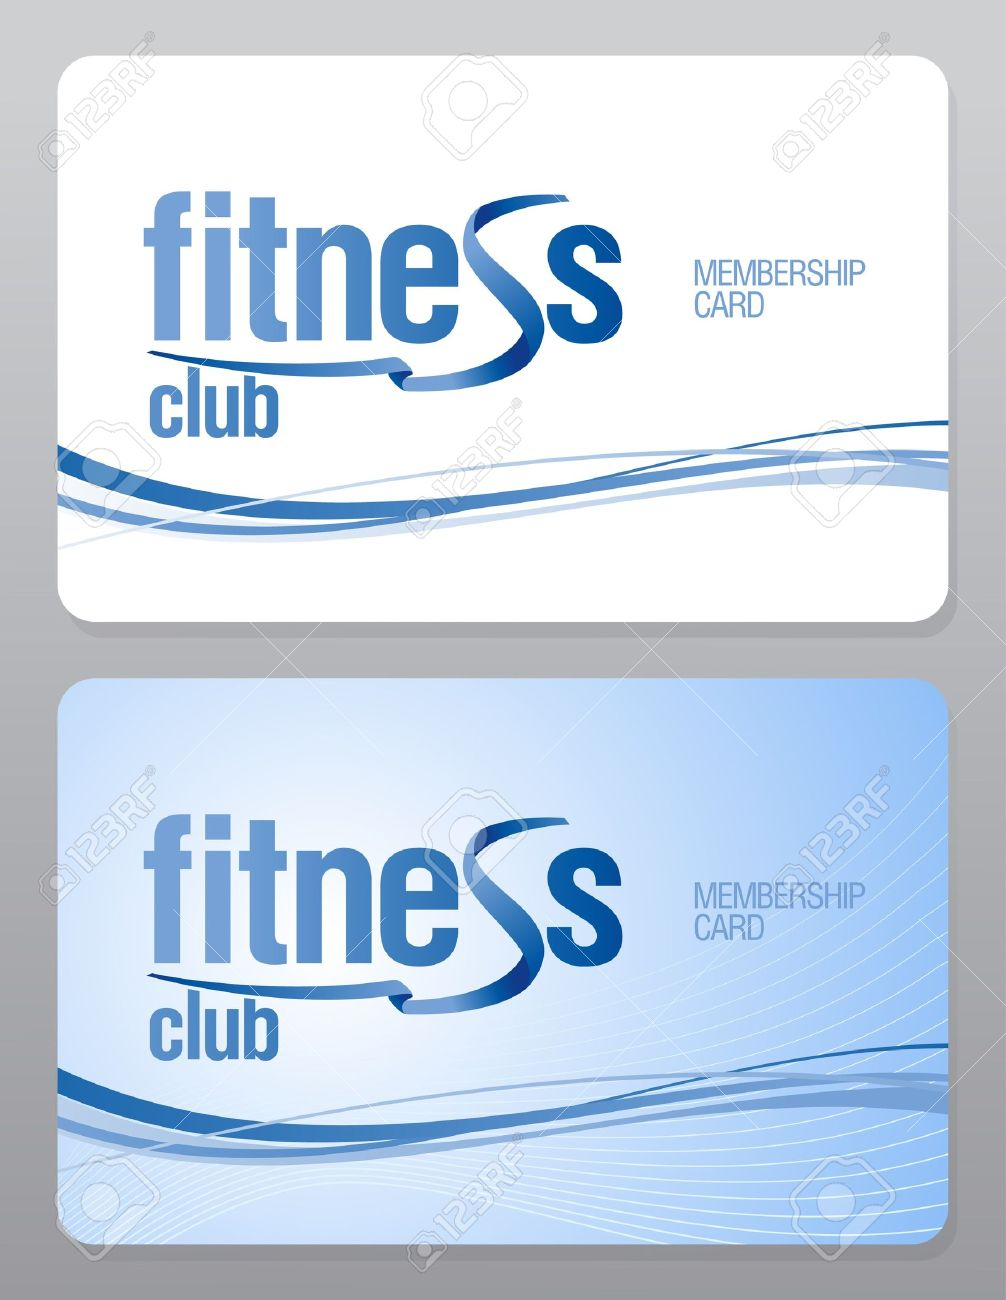 Fitness Club Membership Card Design Template. Inside Template For Membership Cards